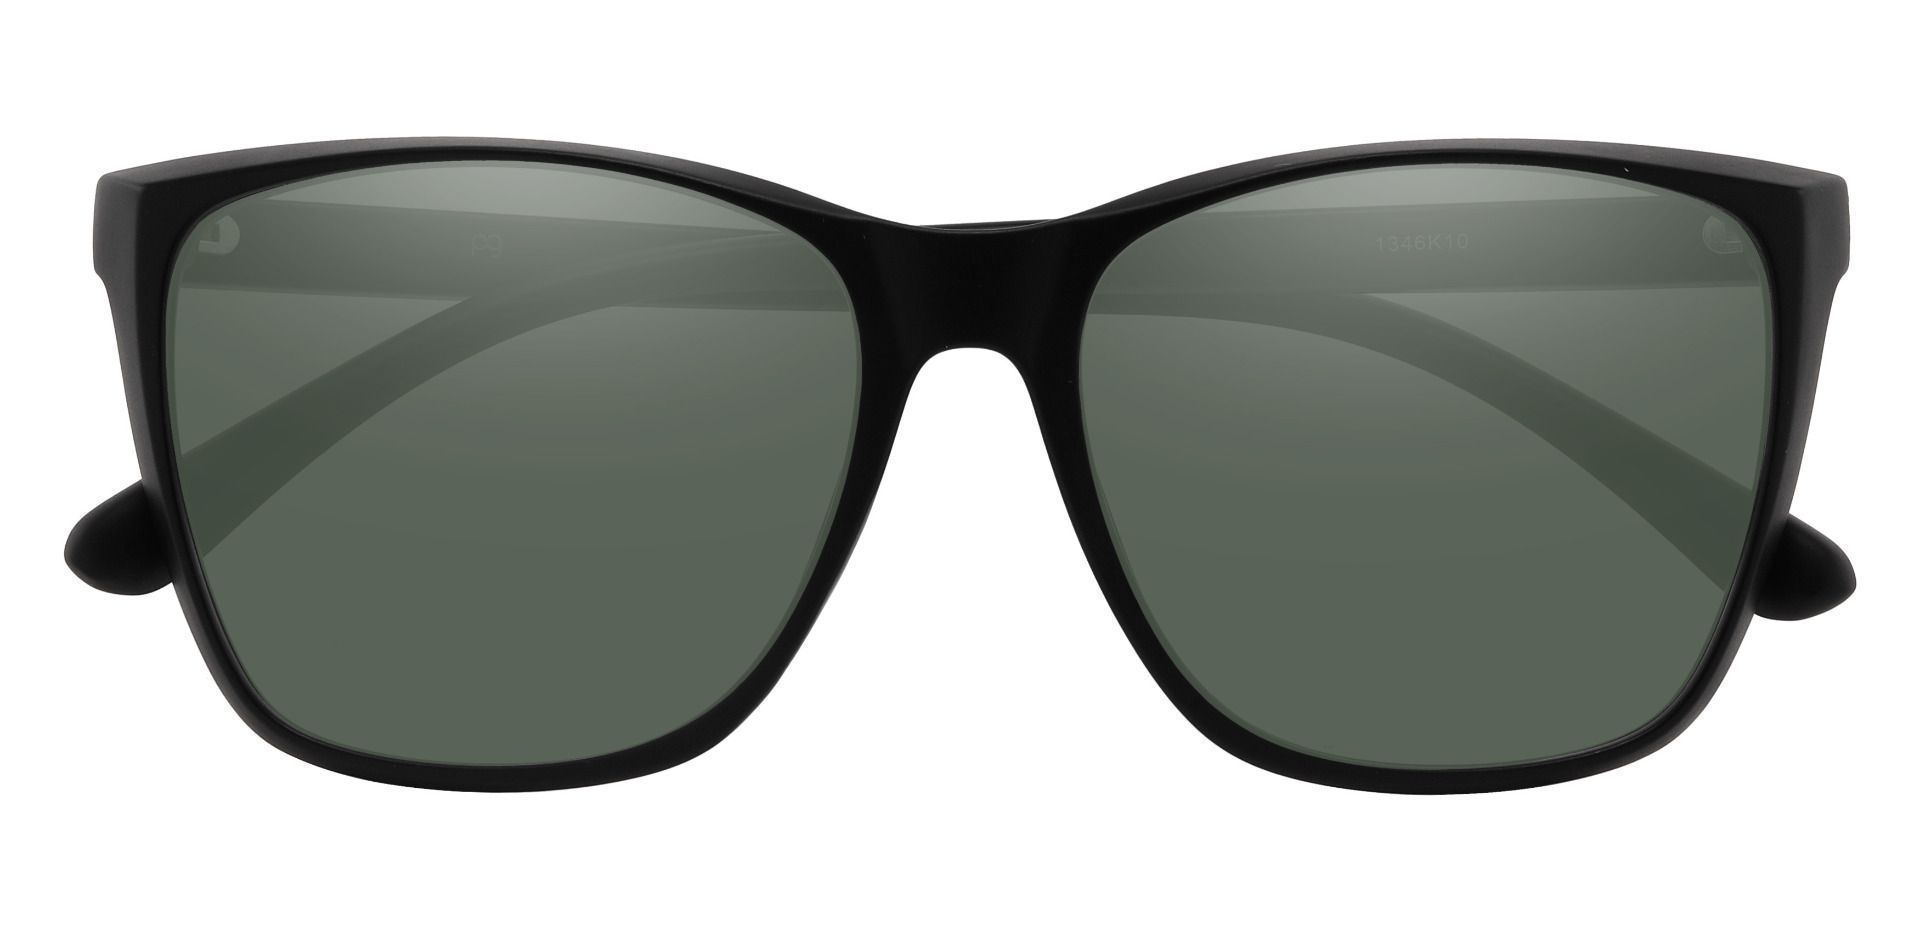 Taryn Square Prescription Sunglasses - Black Frame With Green Lenses